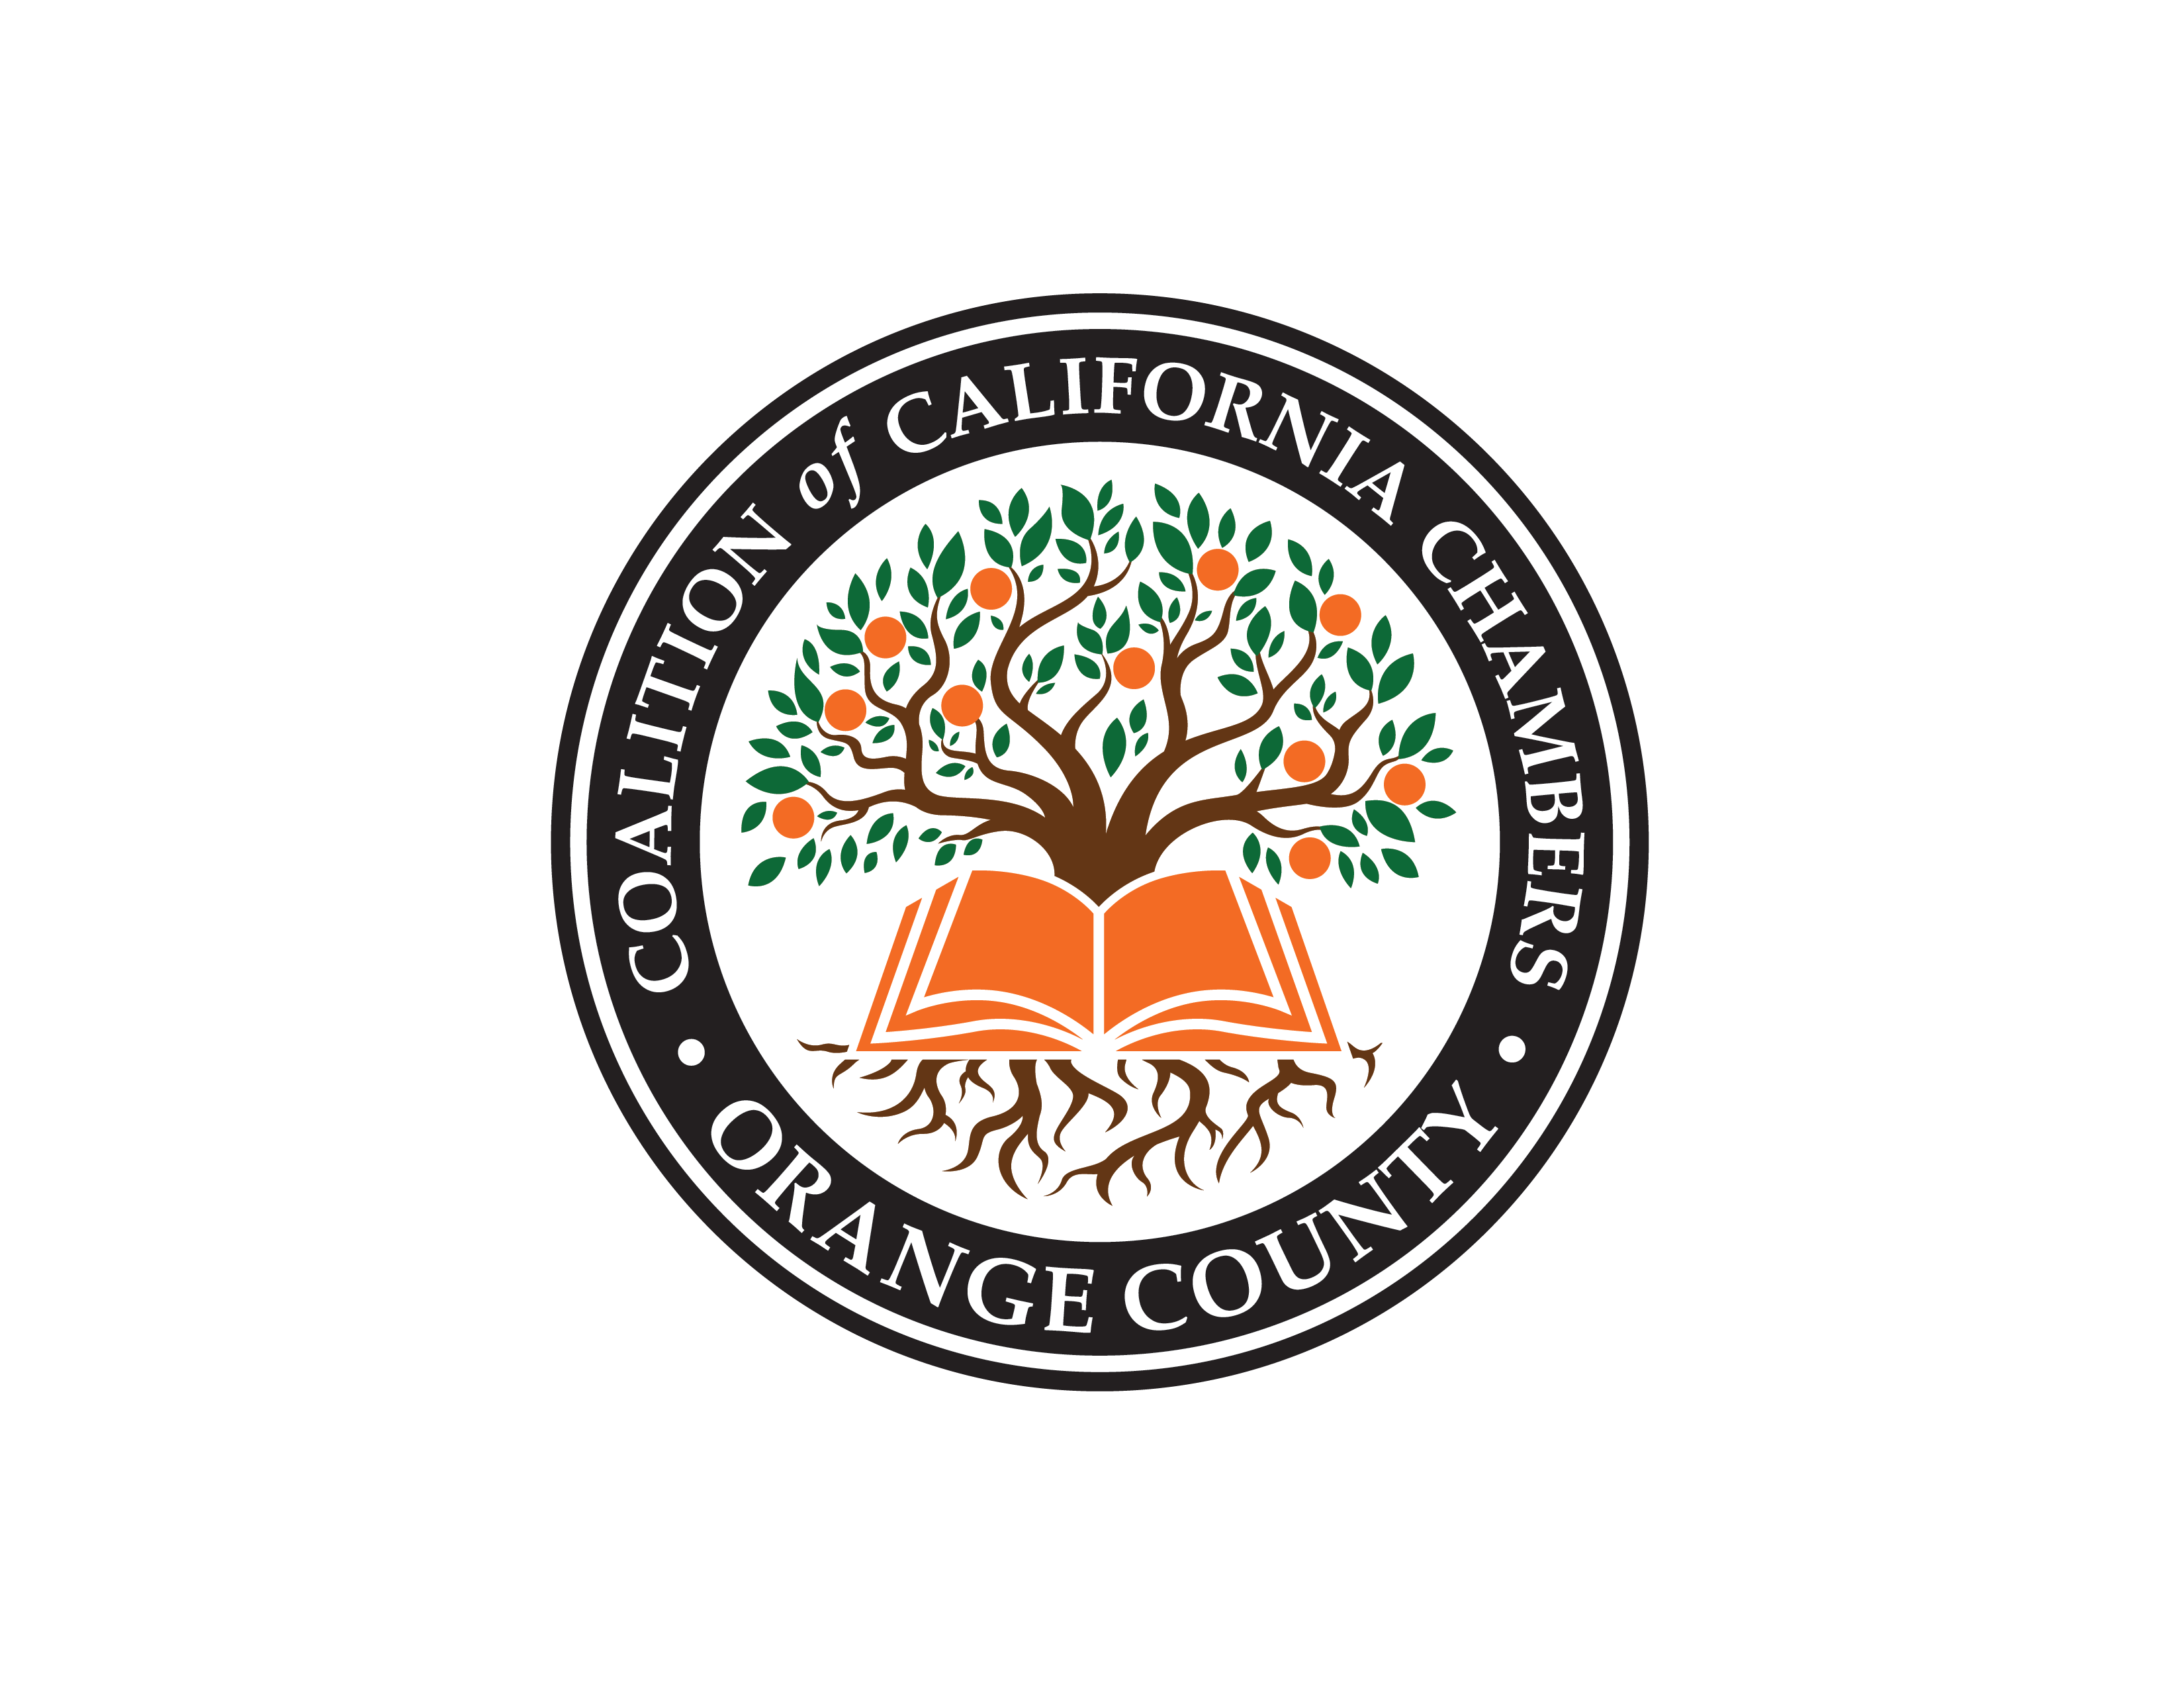 coalition of california chambers orange county logo